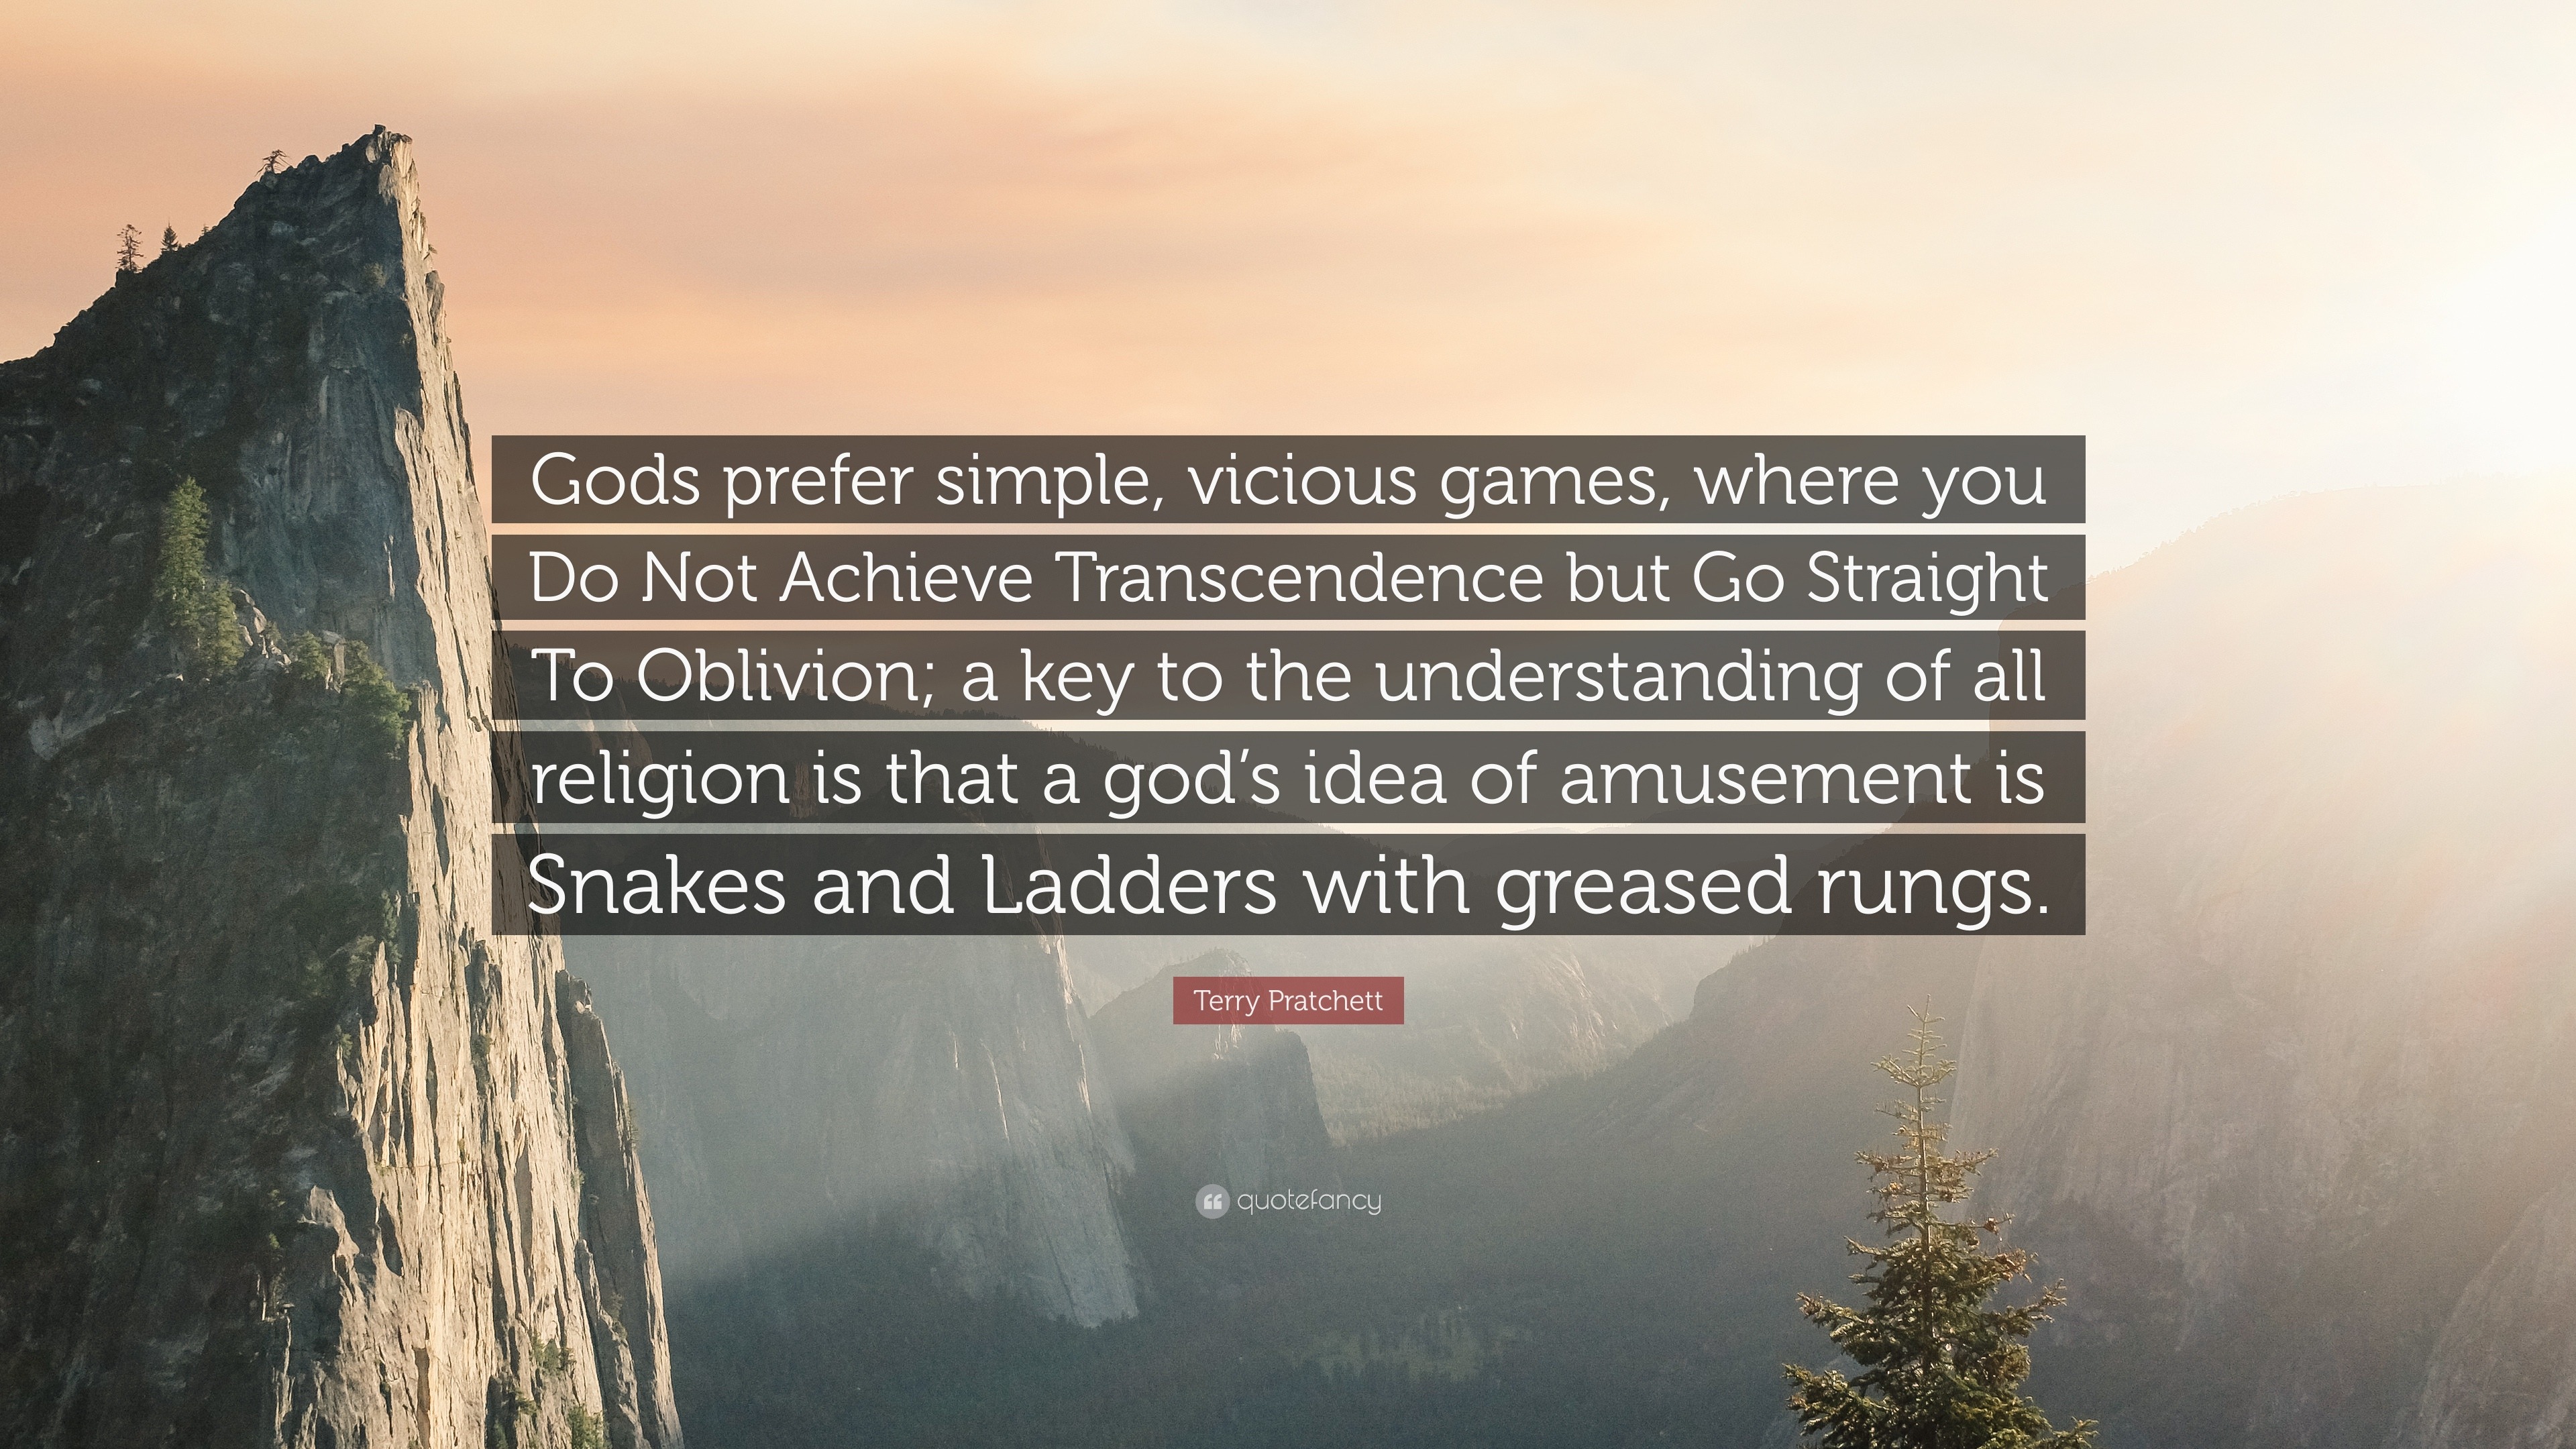 Terry Pratchett Quote “Gods prefer simple, vicious games